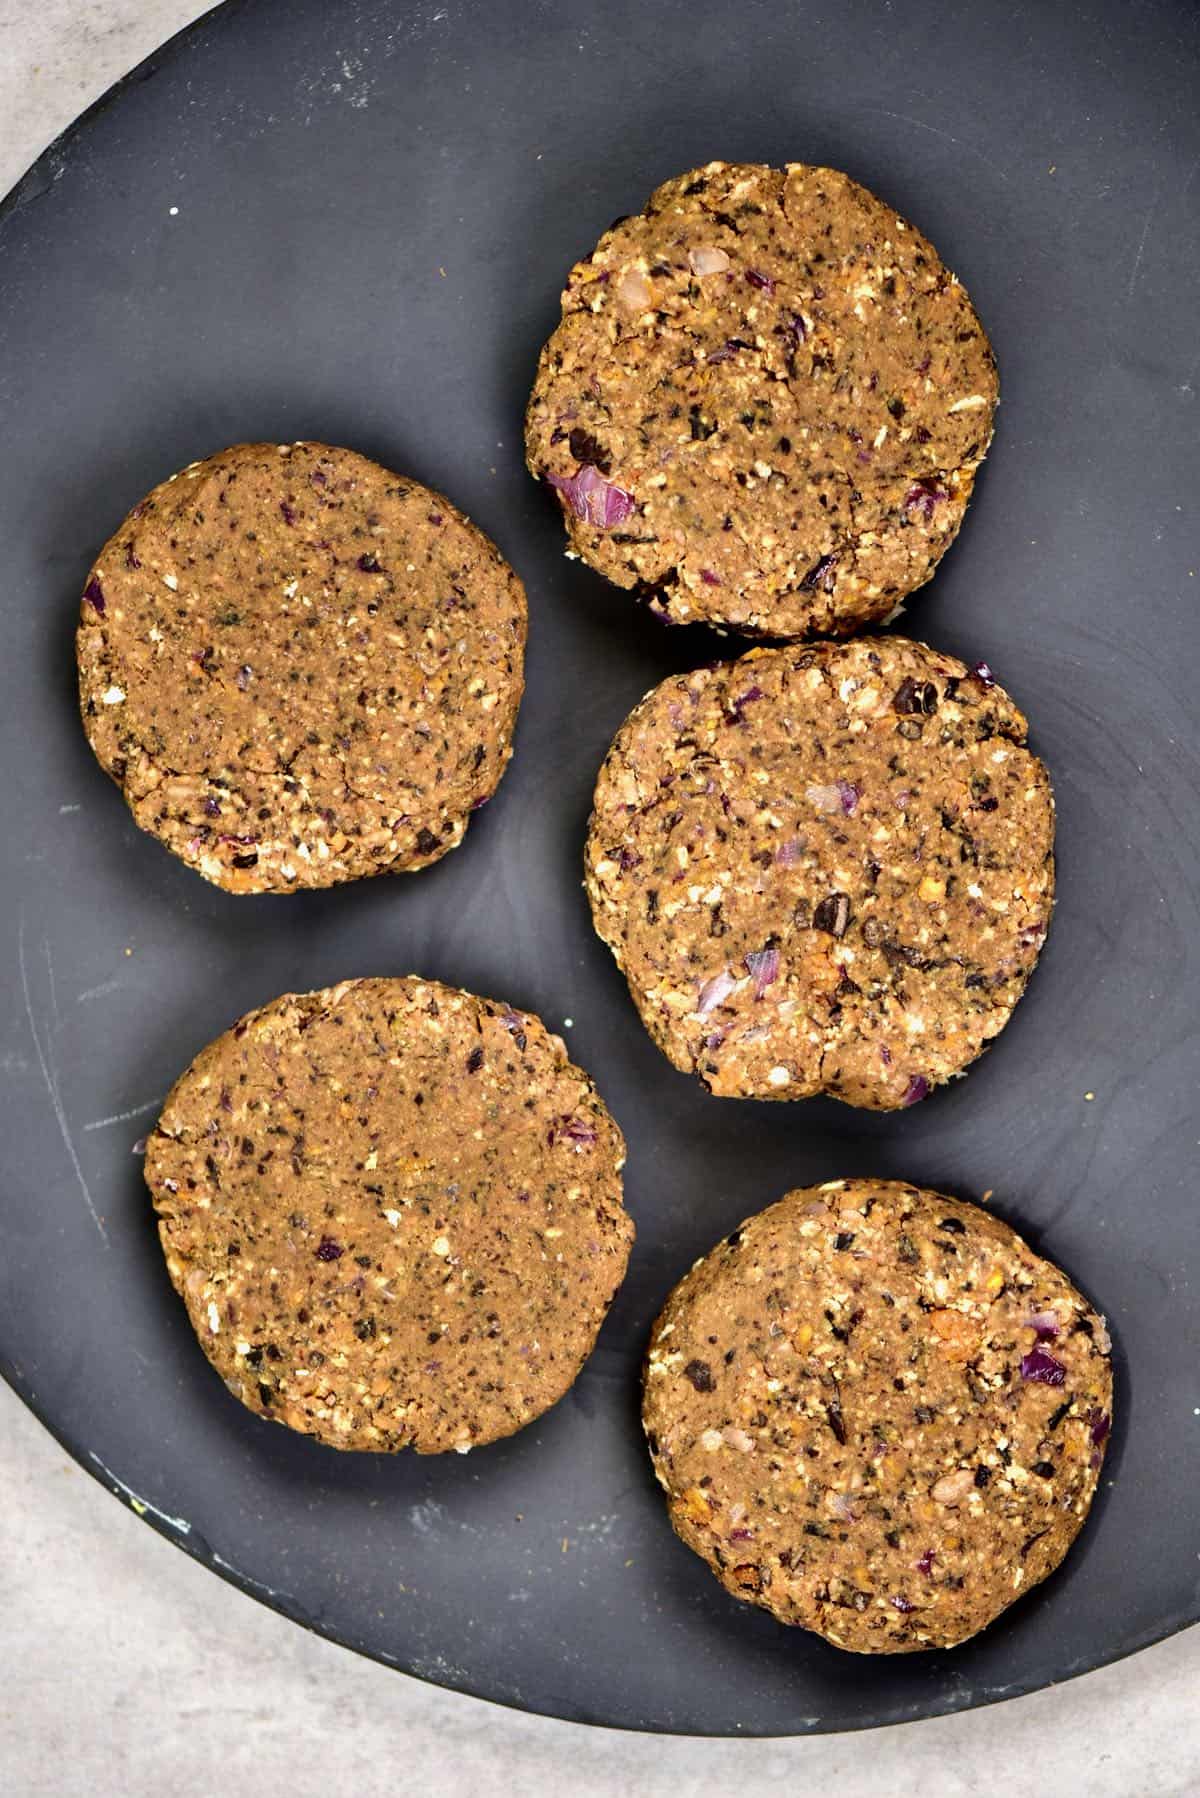 Five black bean burger patties in a black plate